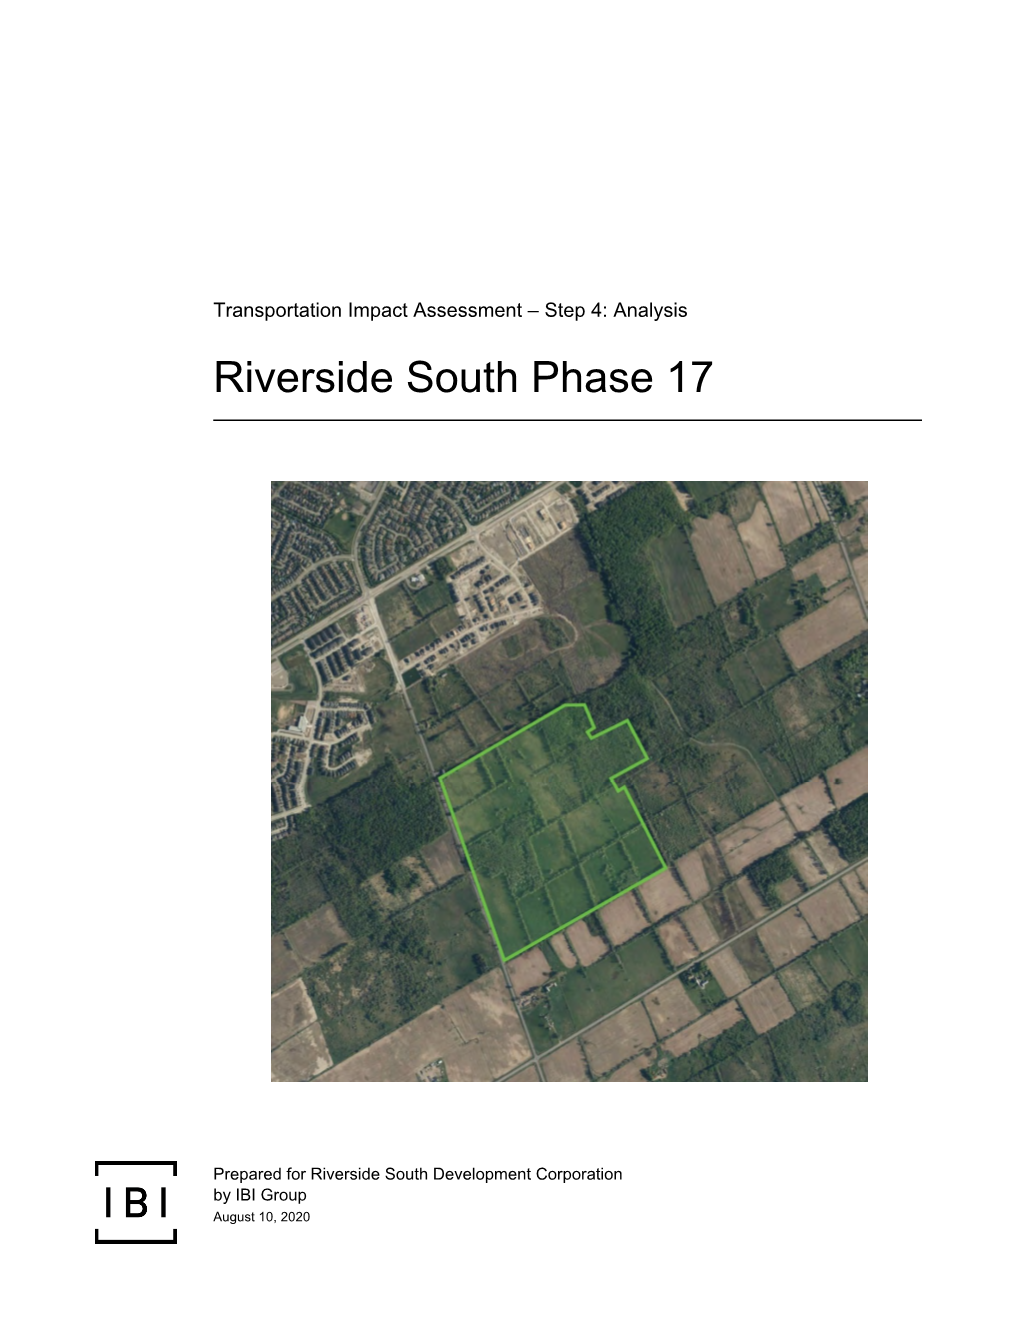 Riverside South Phase 17